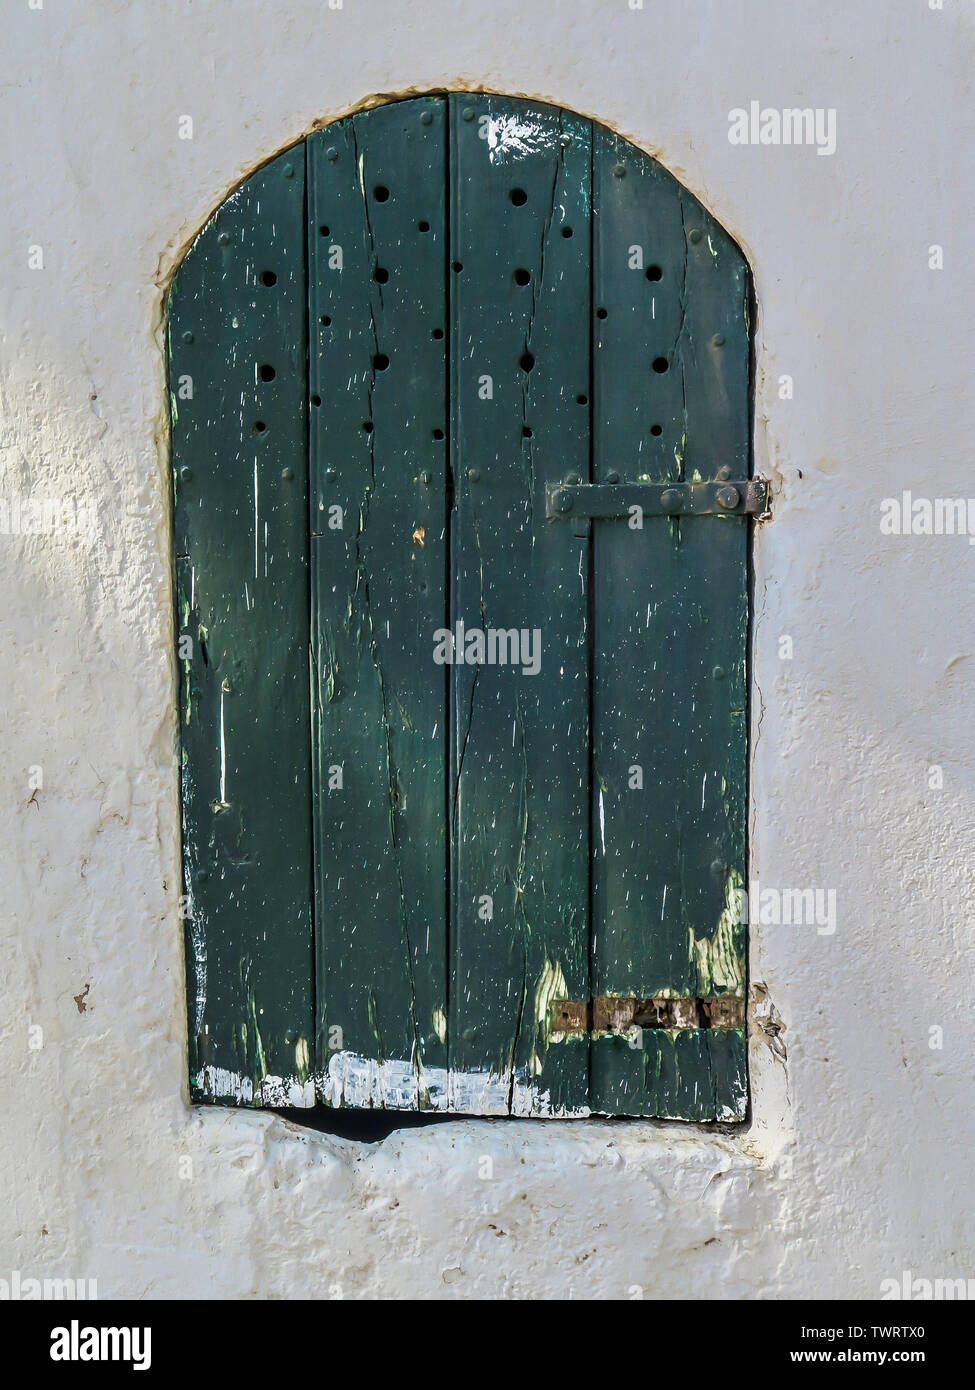 White wash, green door, flaky paint, little door, knubby hole, secret den, storage, latch, small, entrance, vent holes, wooden, planks. Stock Photo